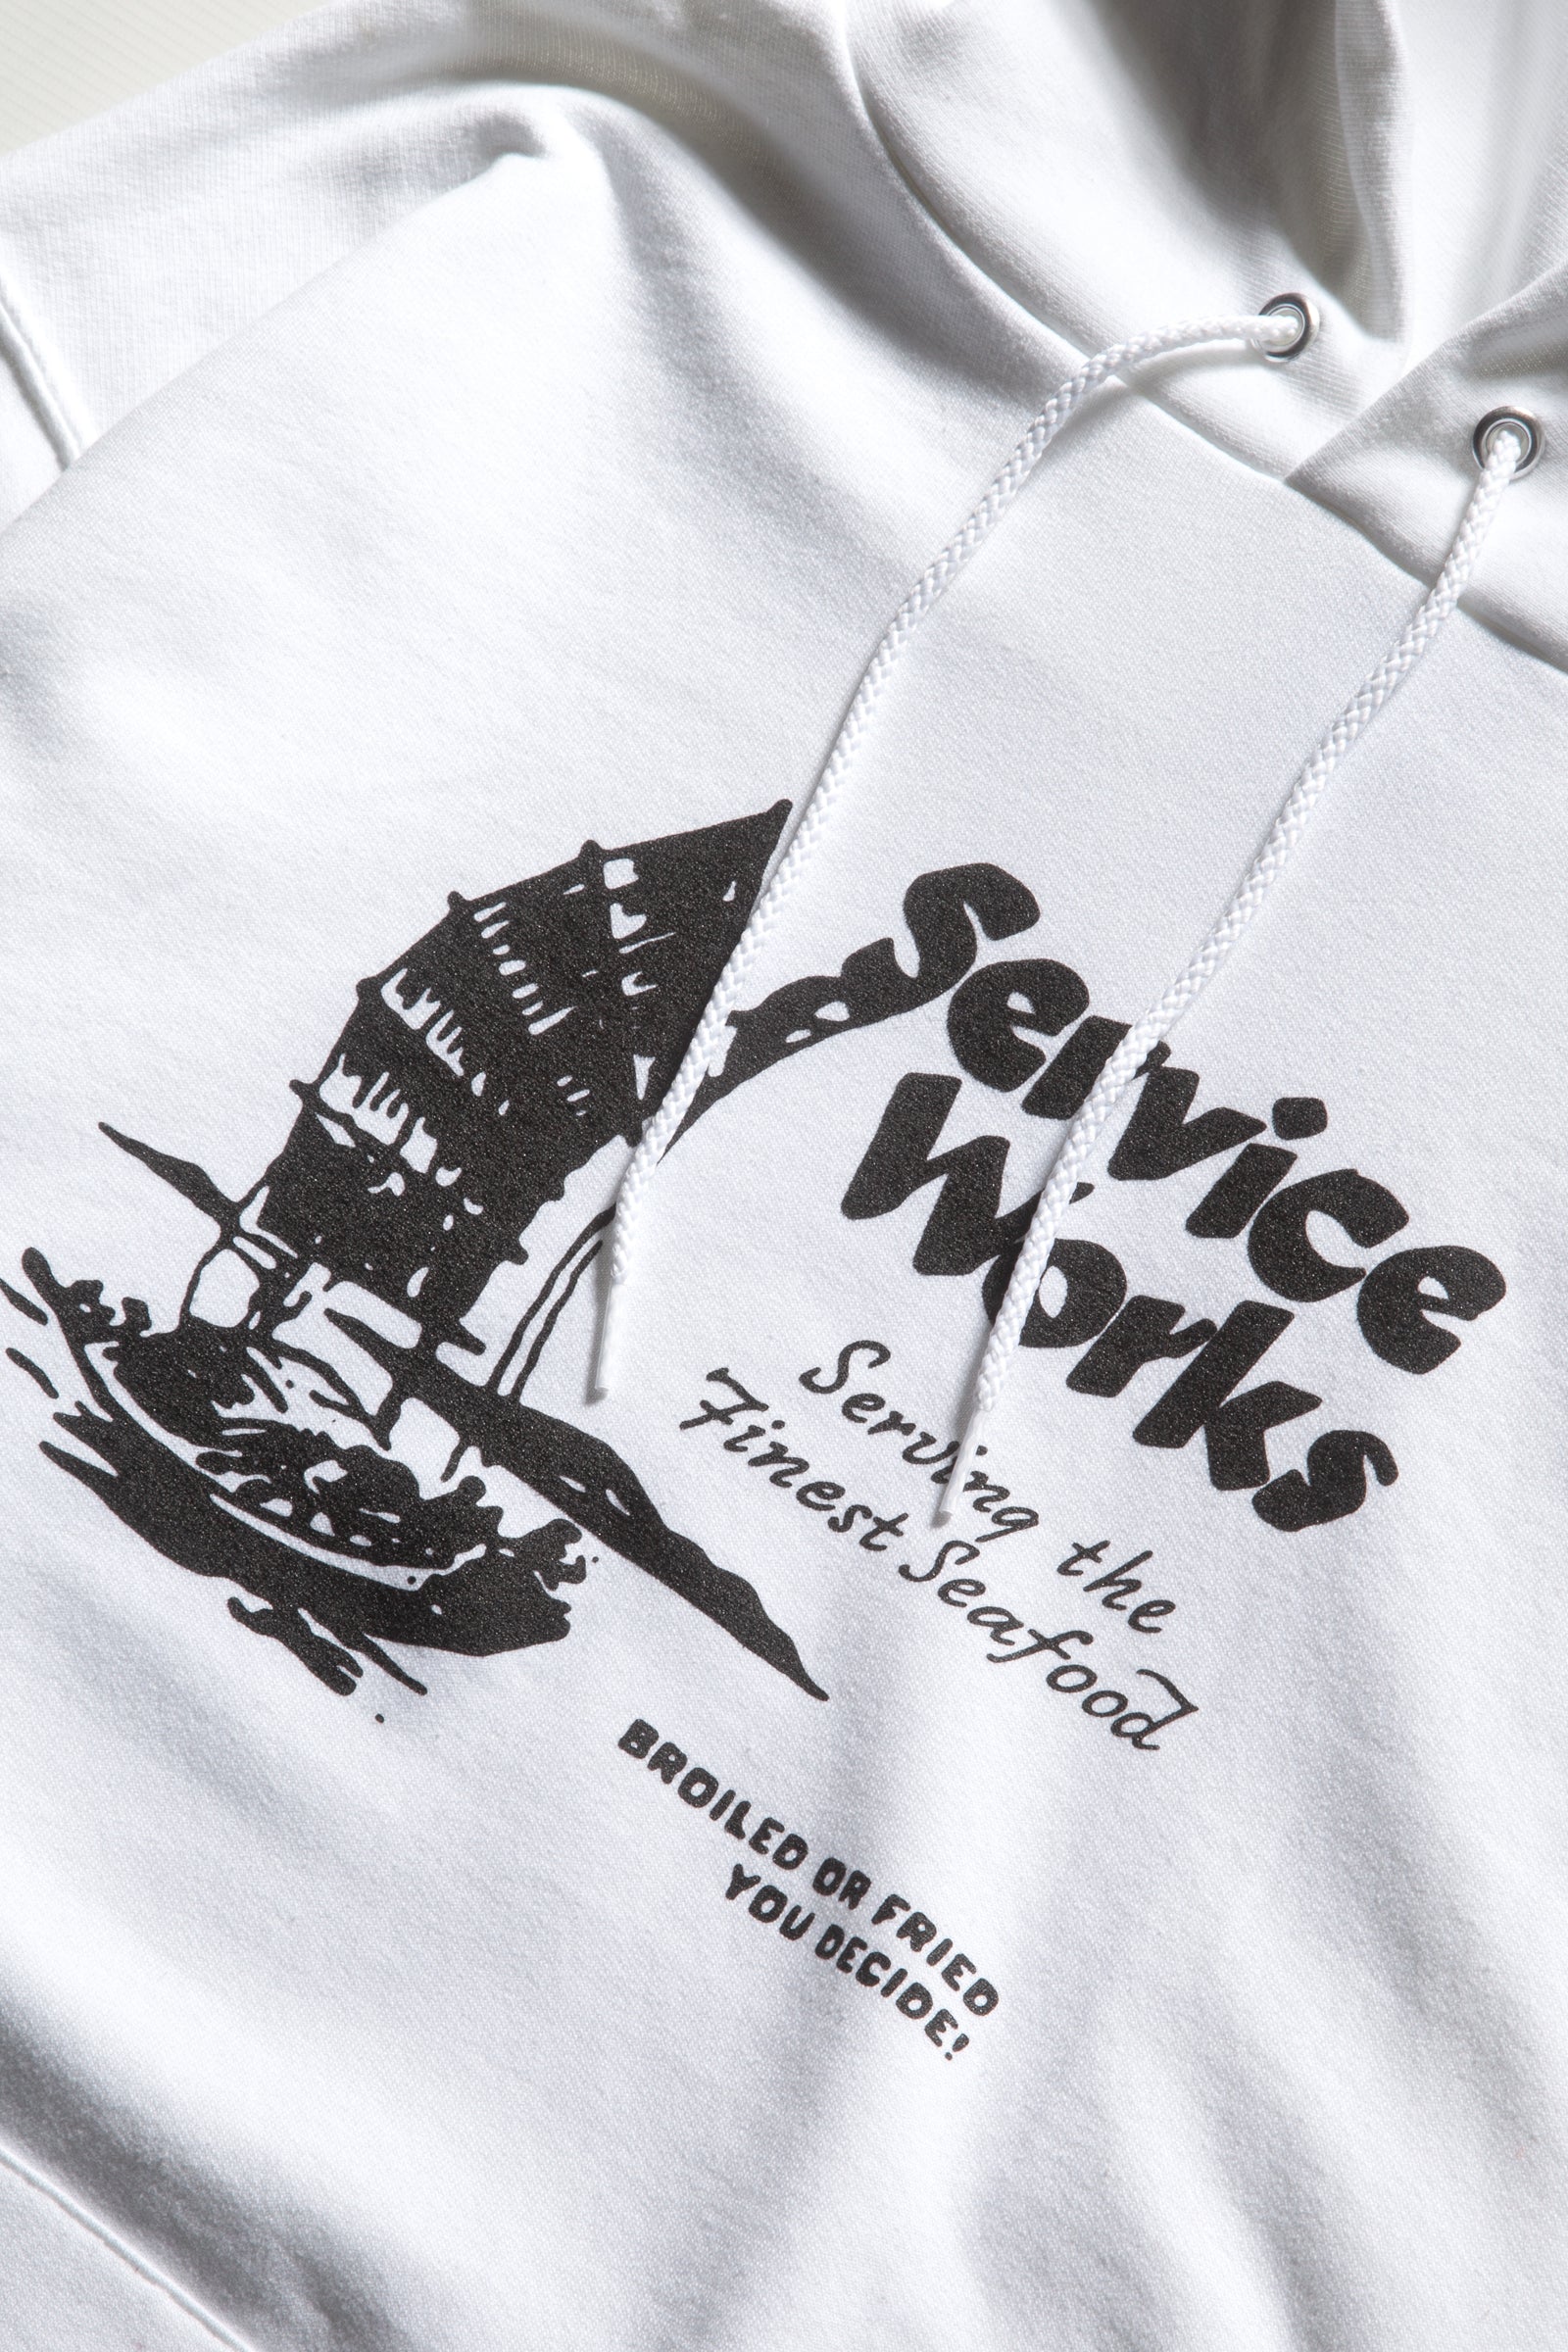 Service Works - Sail Away Hoodie - White